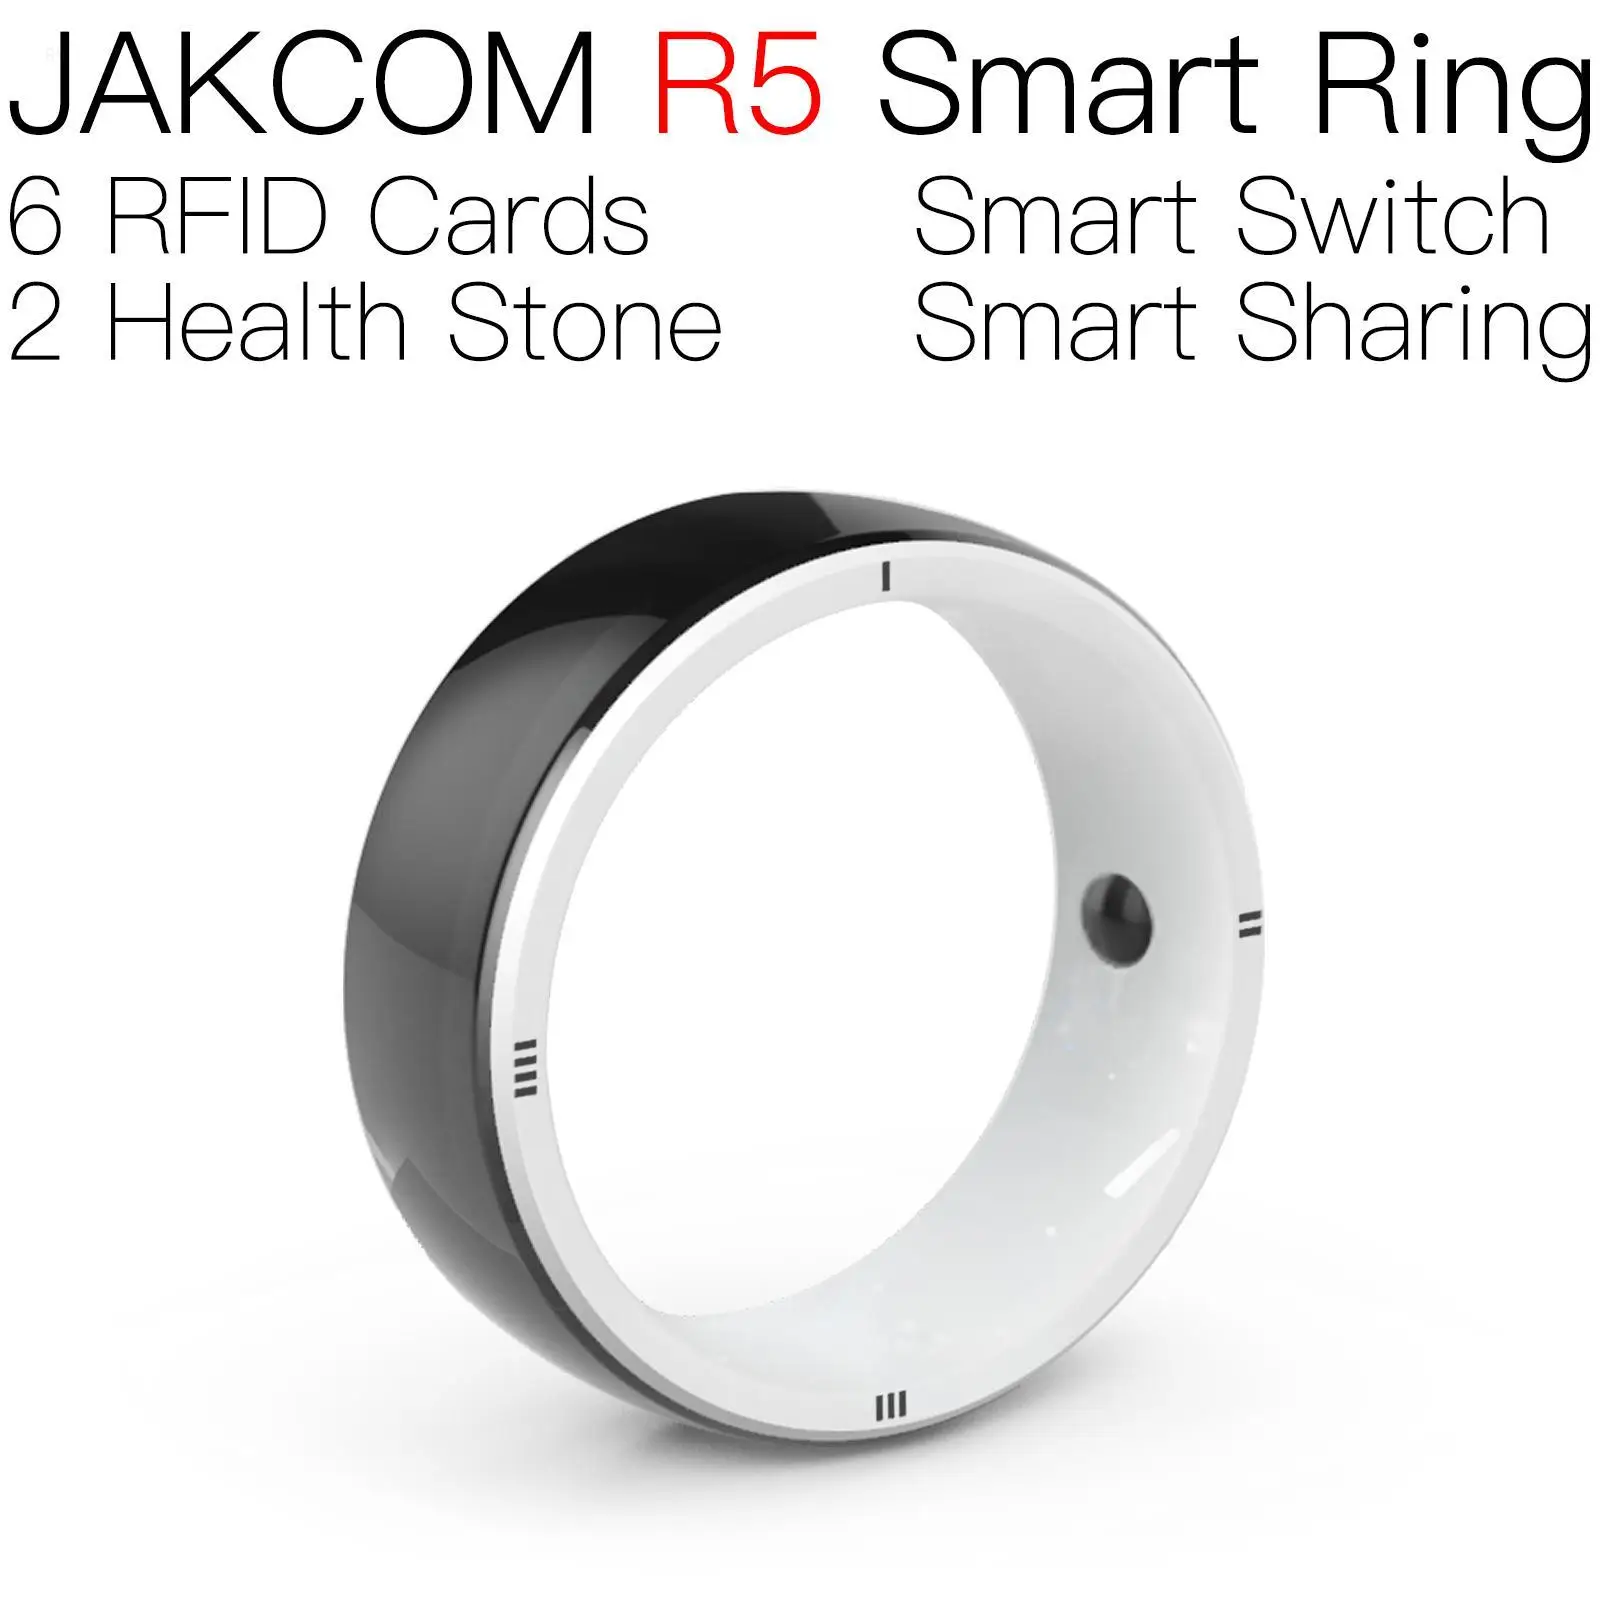 

JAKCOM R5 Smart Ring better than 125khz rfid card access key 100 pcs waterproof pet material nfc stickers smart ntag213 tags